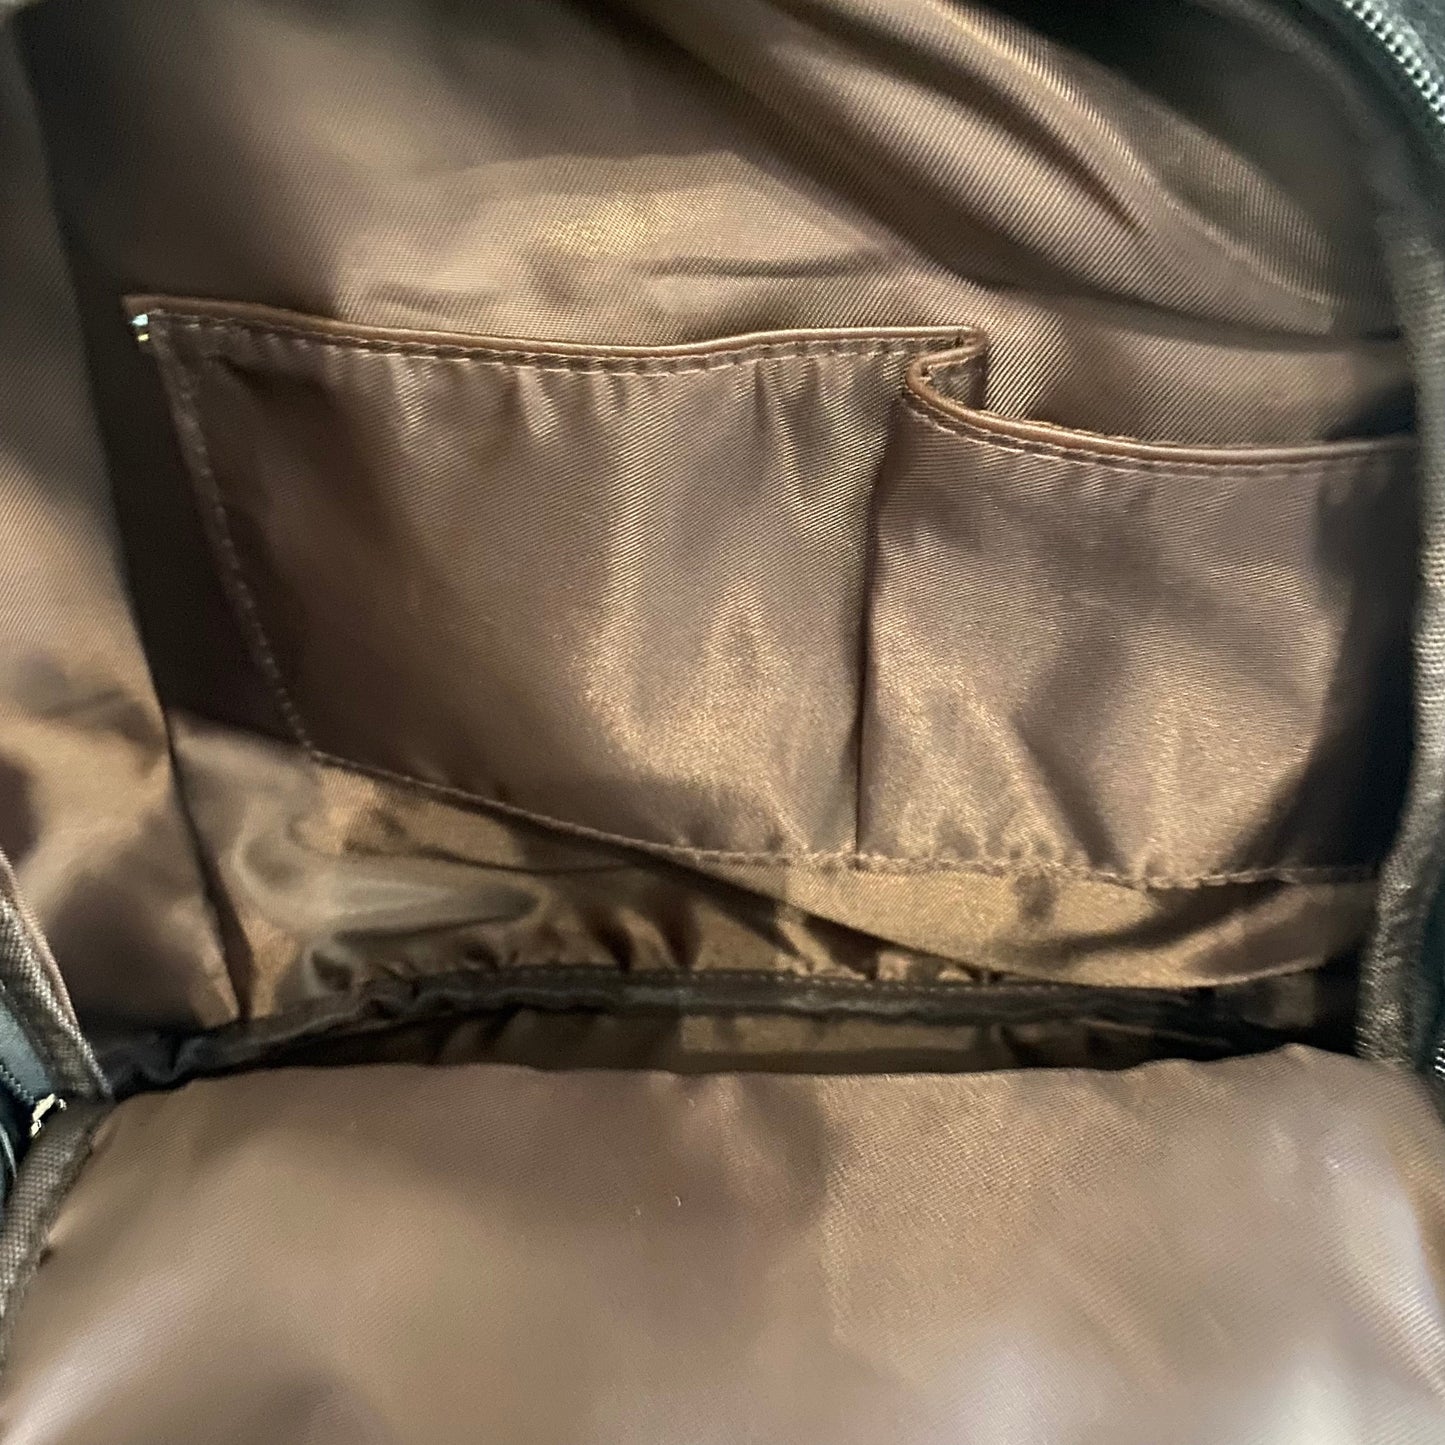 Charlotte - Bow Backpack + Handbag